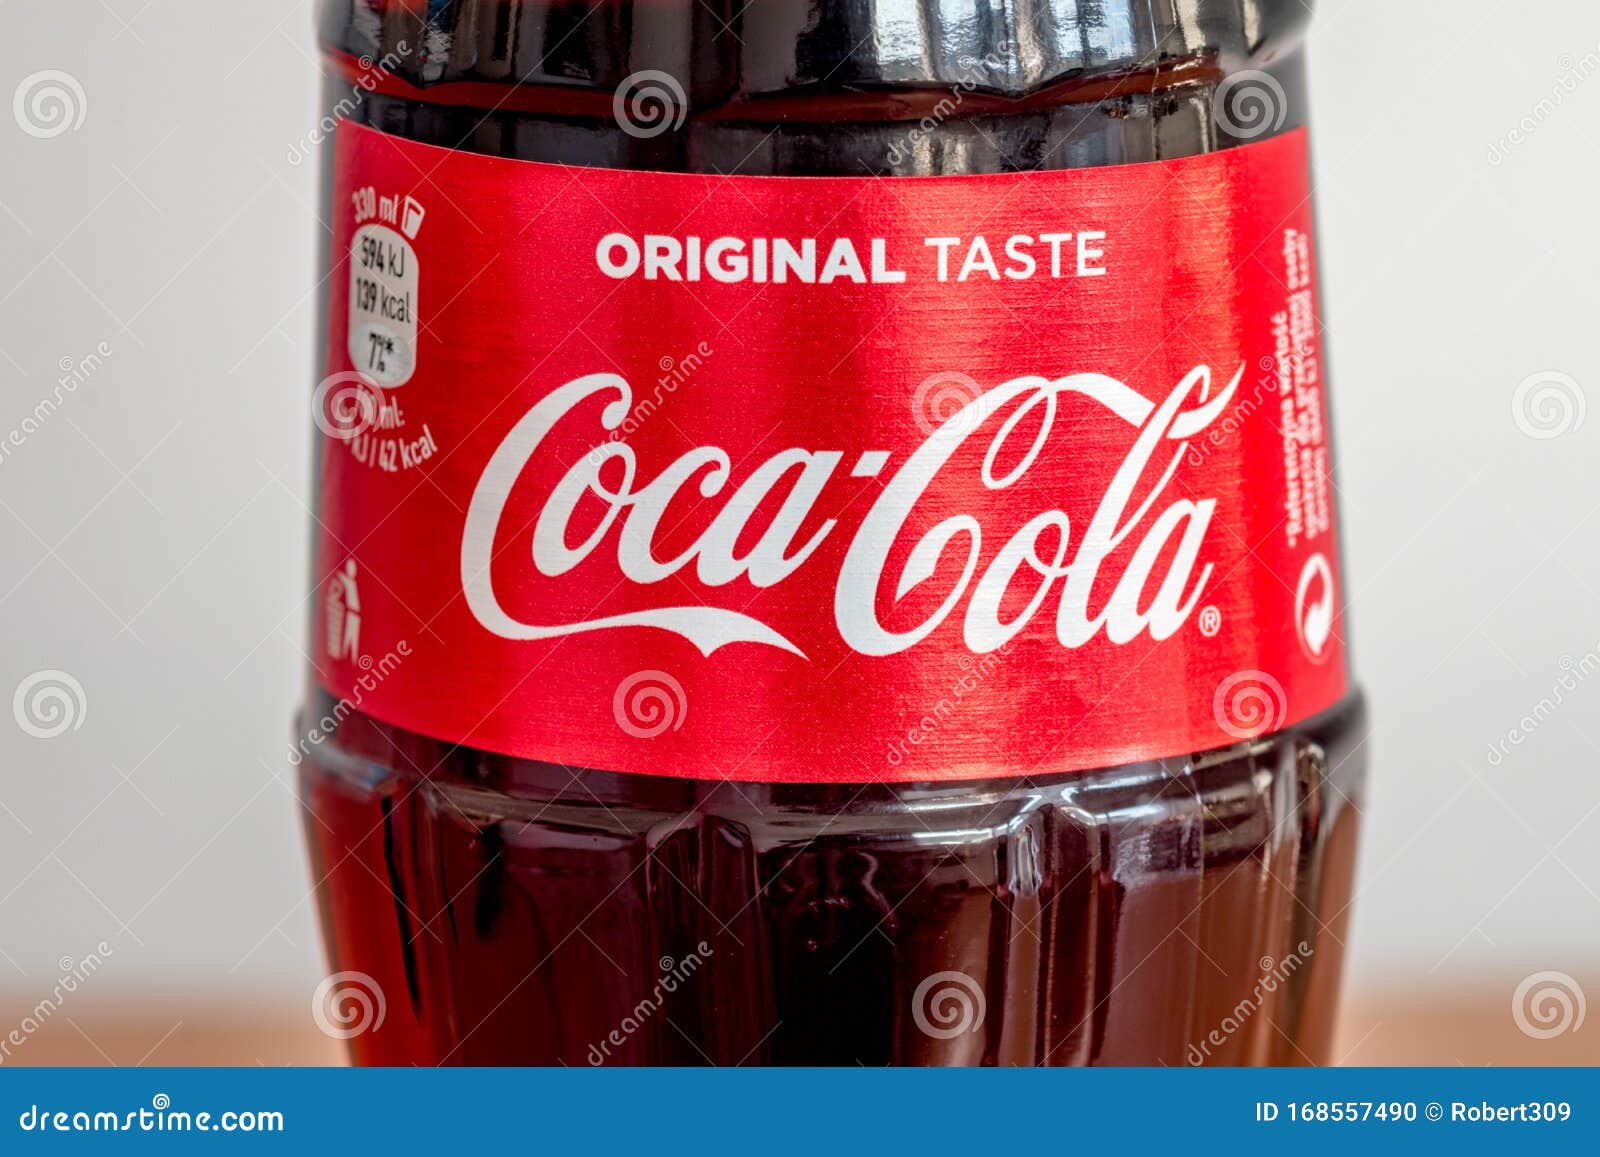 Coca Col A Brand Of Multinational American